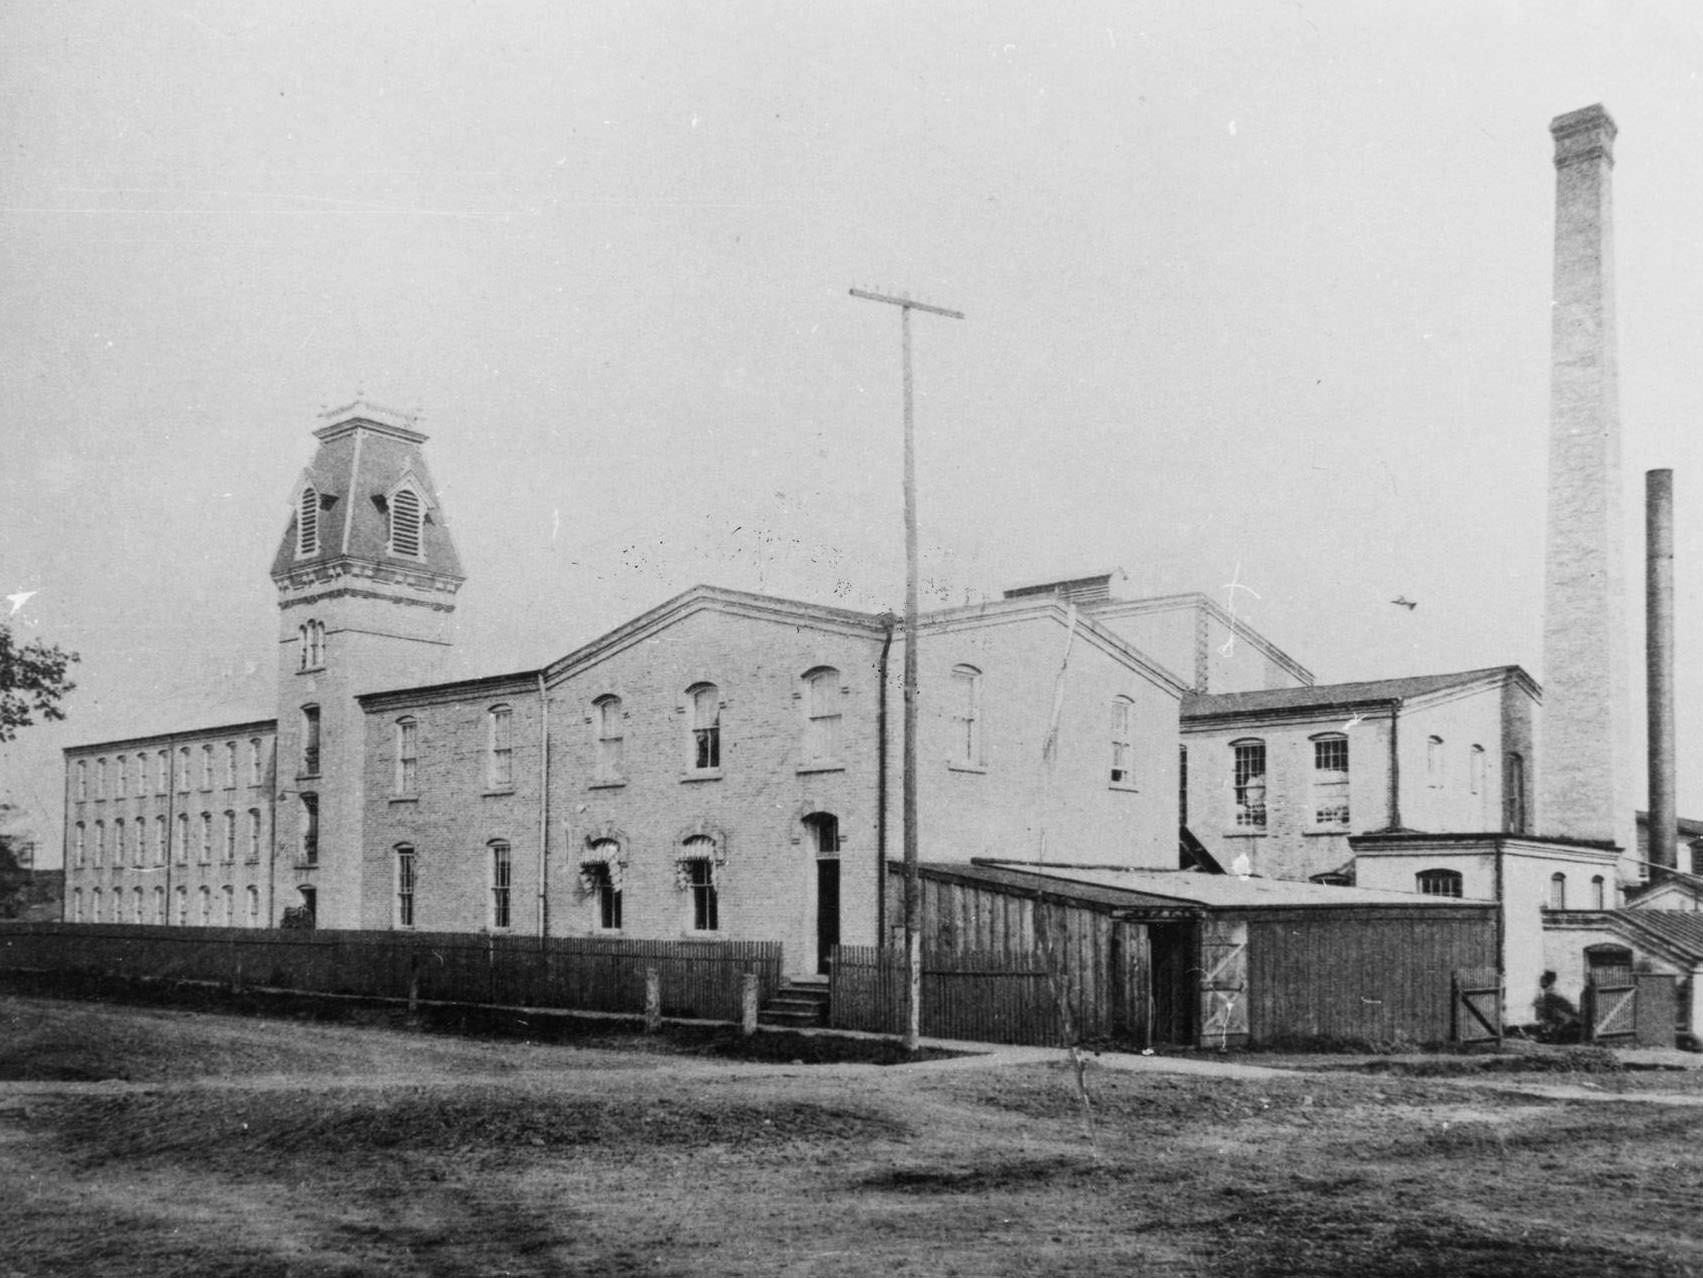 Janesville Cotton Mills building at 216-220 North Franklin Street, 1888